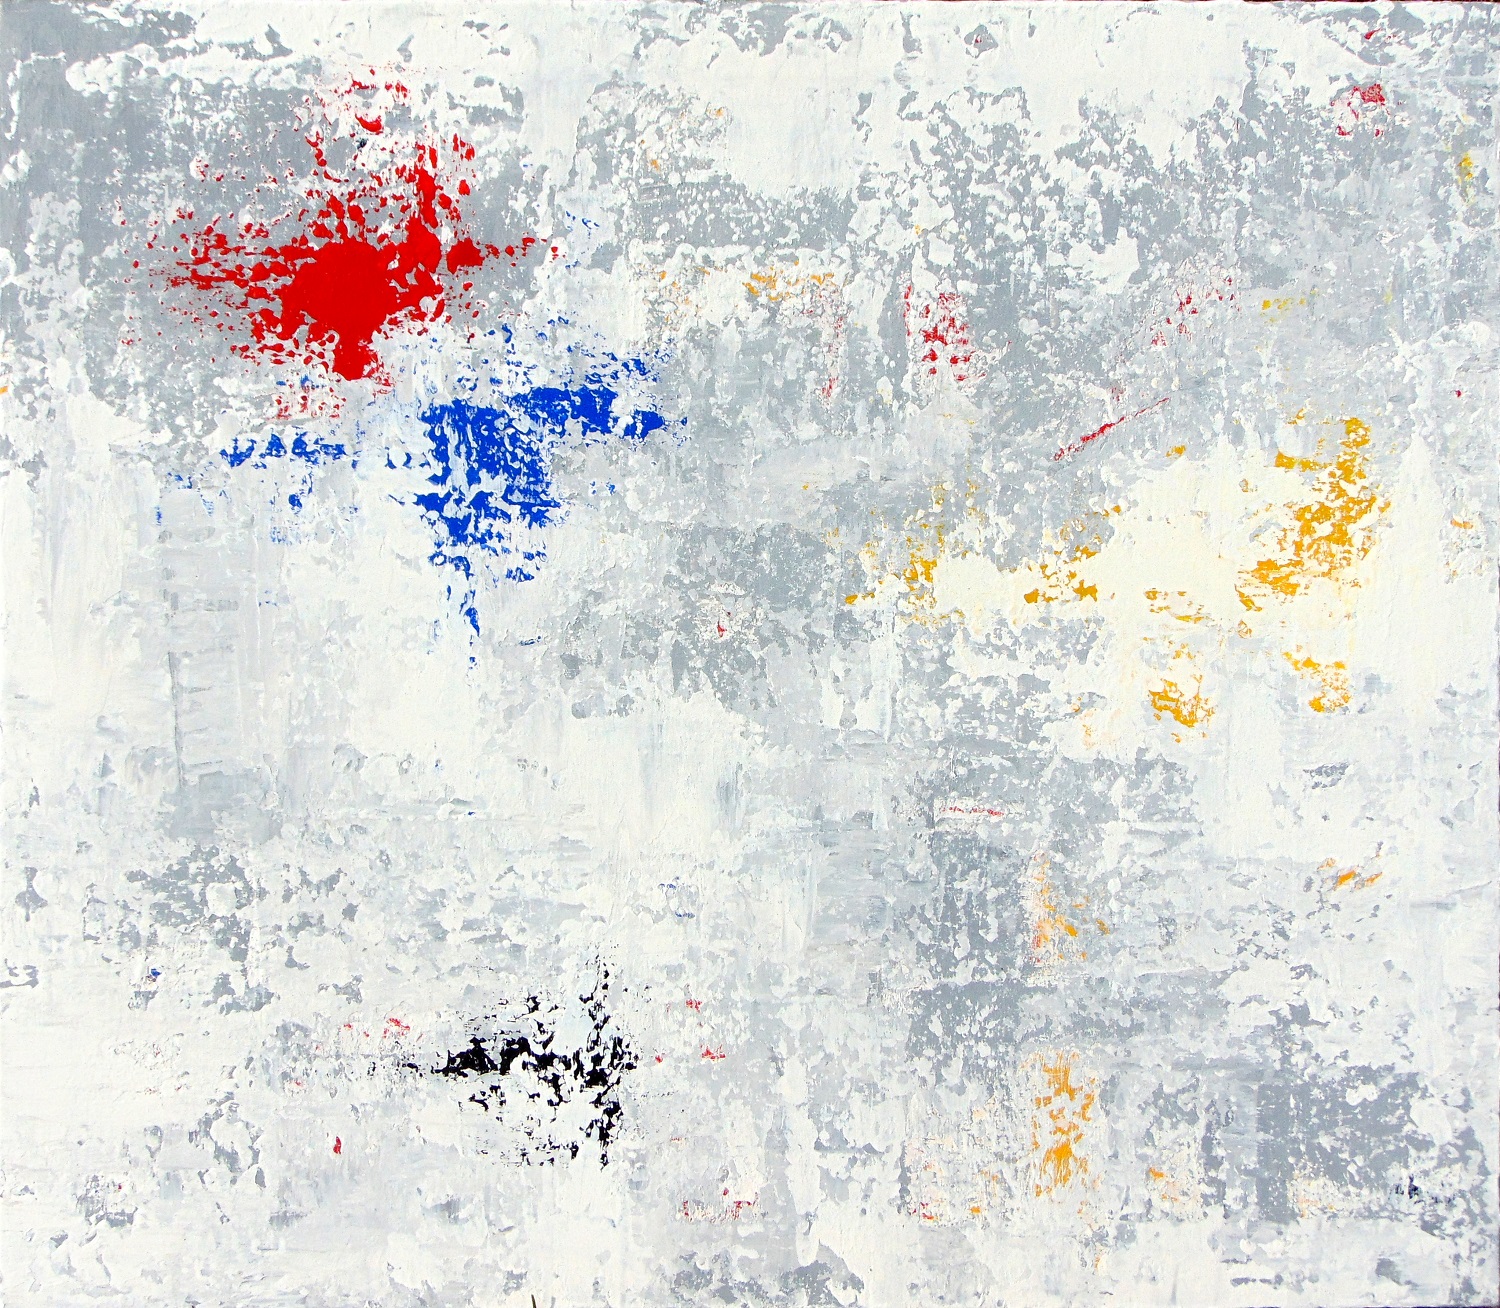 Revisiting Mondrian (acrylic on canvas, 80cm x 90cm)